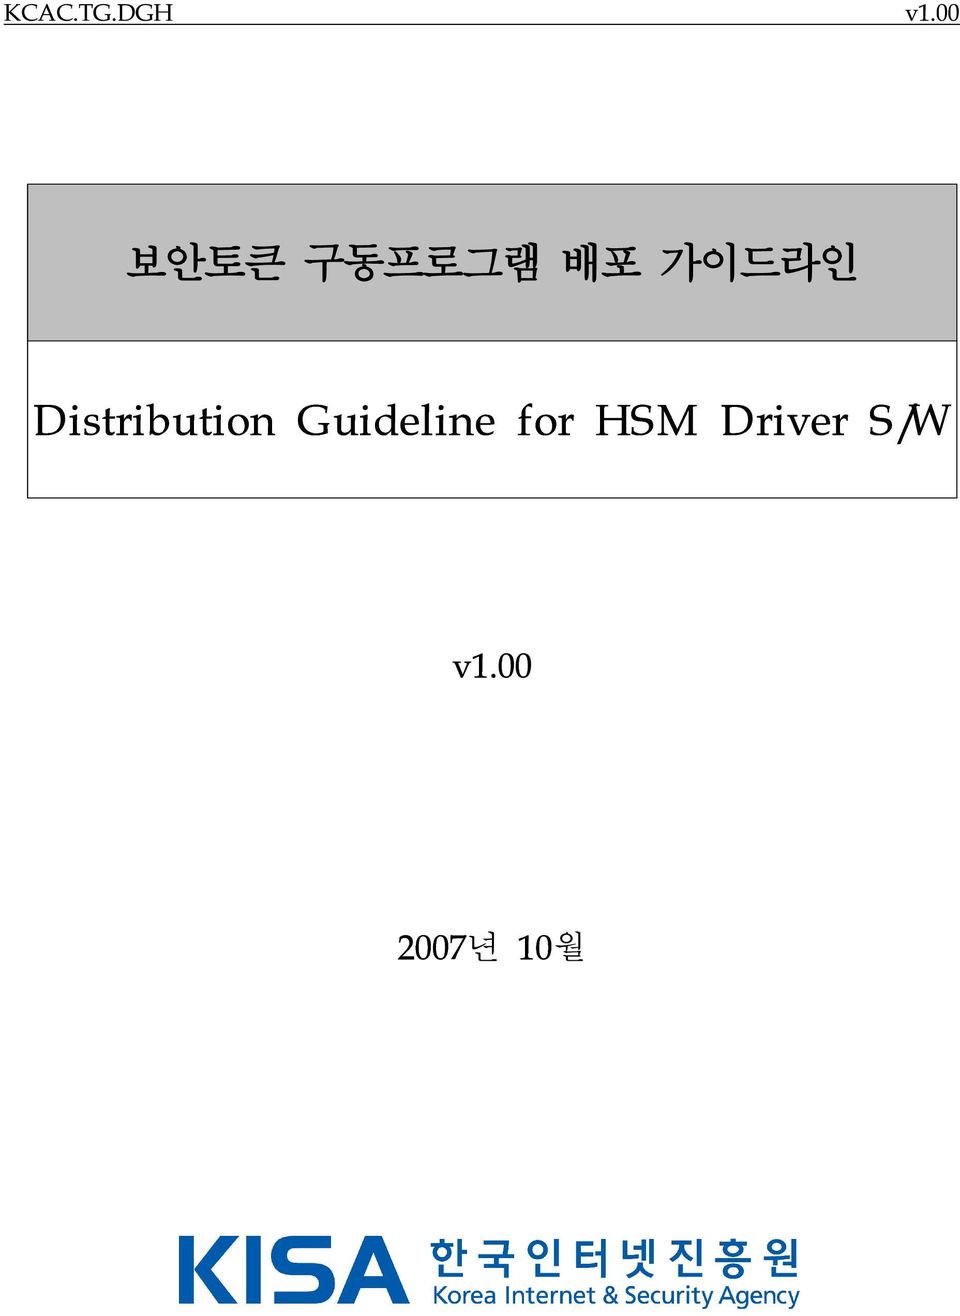 Guideline for HSM